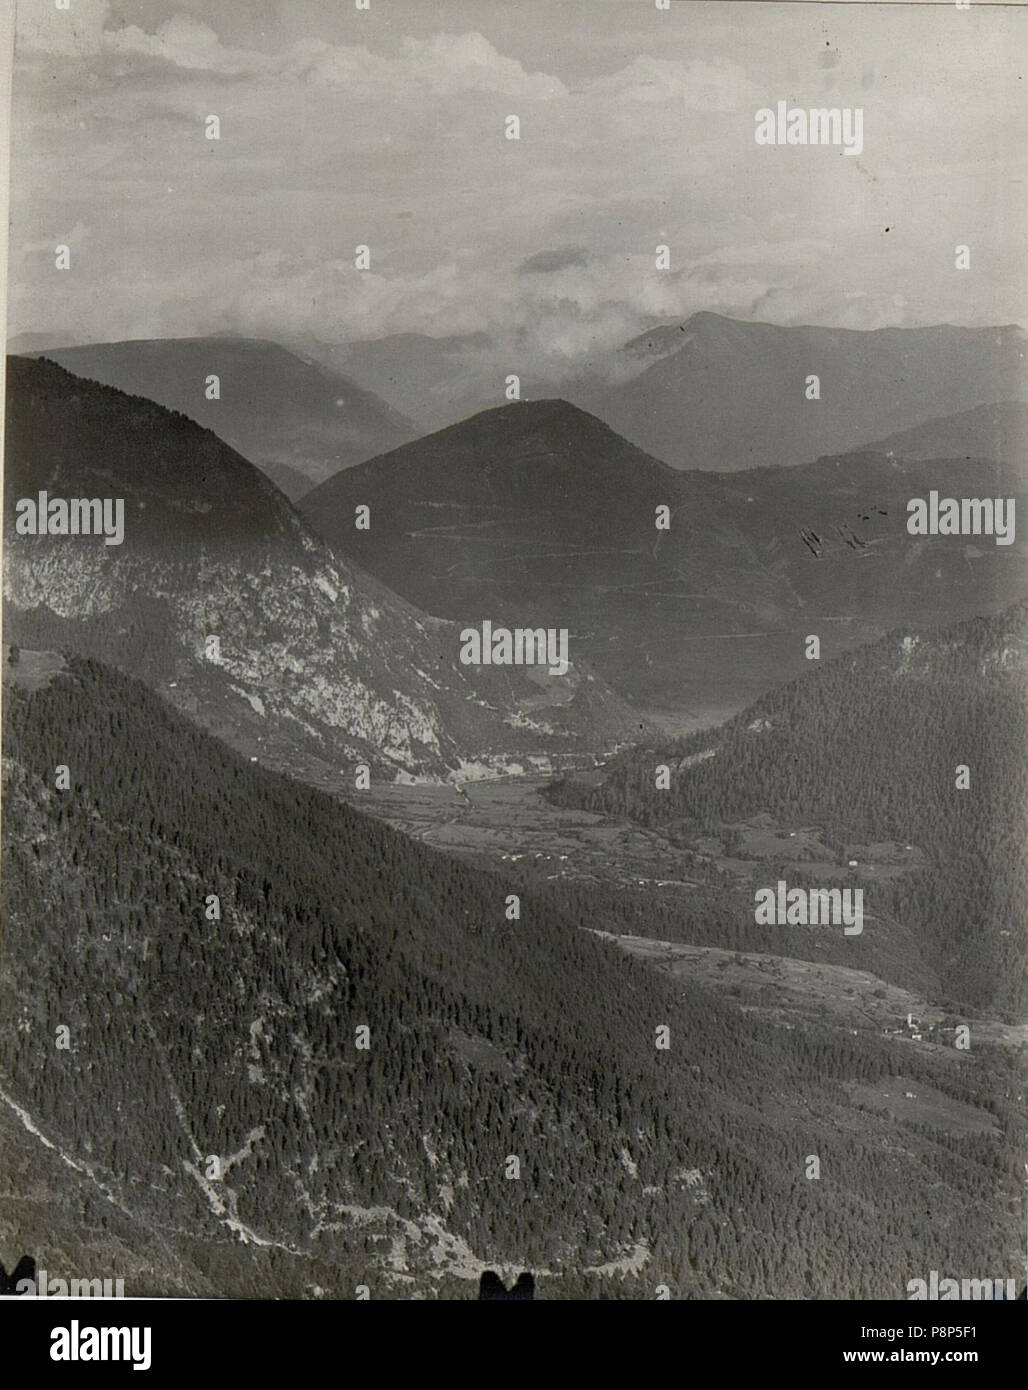 451 Panorama, Standpunkt Salubio. ¤ 1887. (10. Teilbild zu WK1 ALB083 24378 a) (BildID) 15632421 Stockfoto